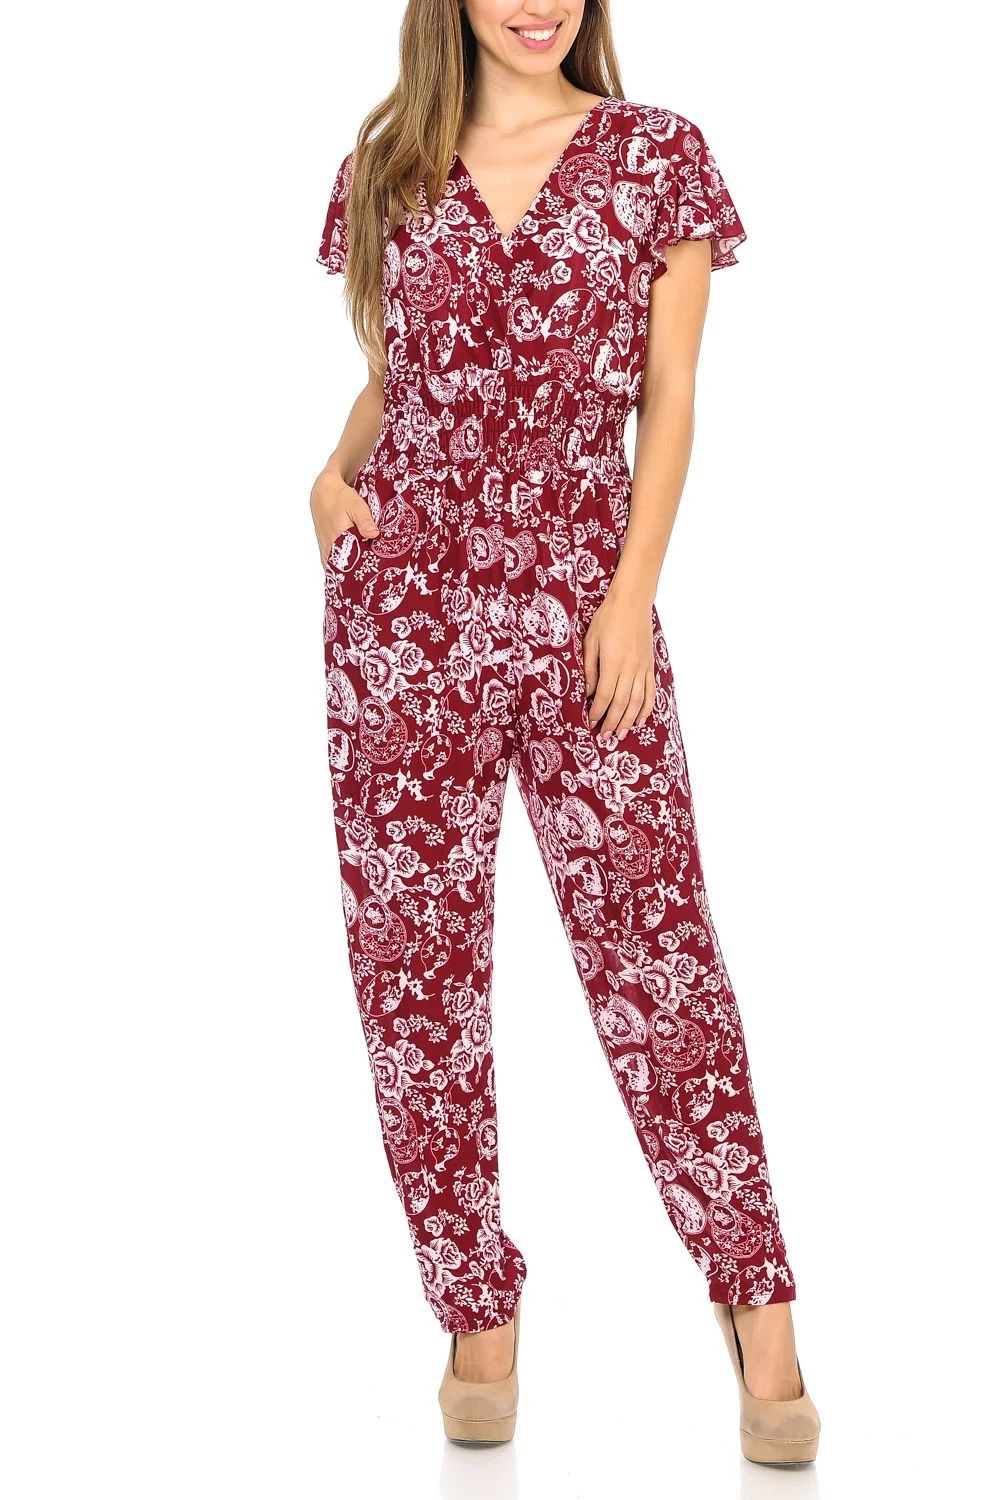 Auliné Collection Womens Short Cap Sleeve V-Neck Long Pants Romper Jumpsuit - Red Toile Floral S... | Walmart (US)